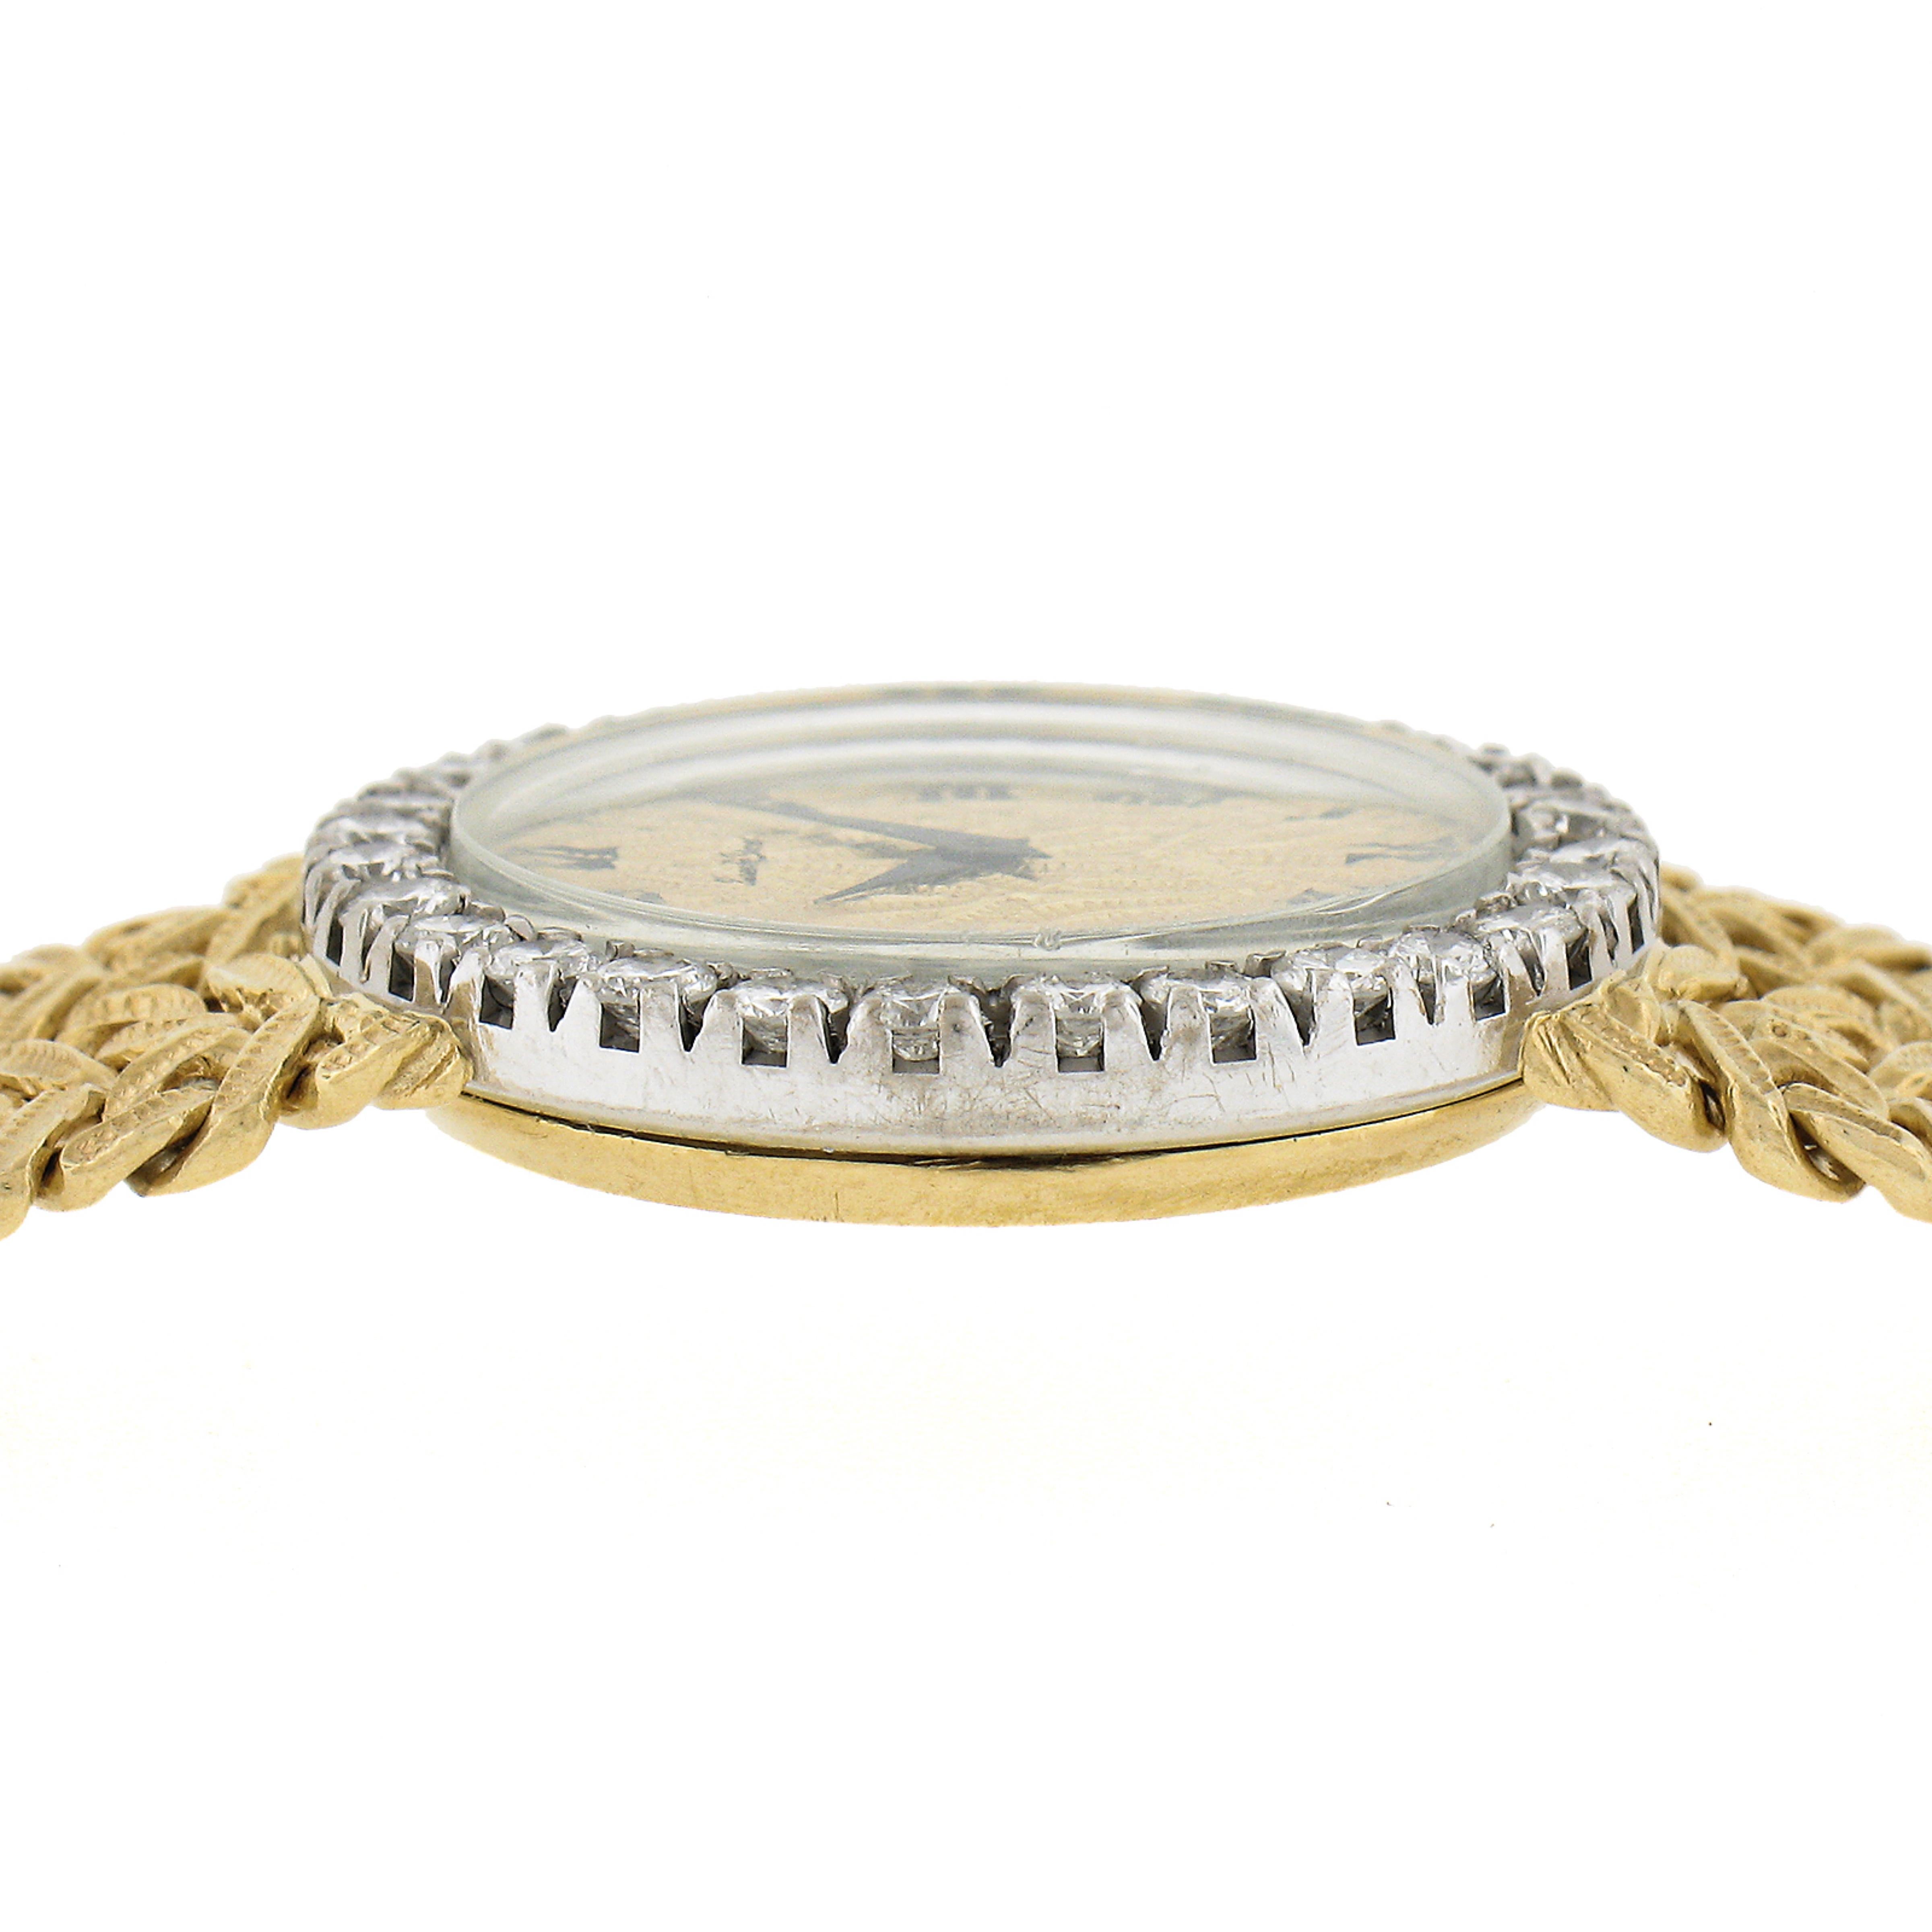 Vintage Bueche Girod 18k Gold 17j Mechanical Round Diamond Wrist Watch Bracelet For Sale 1